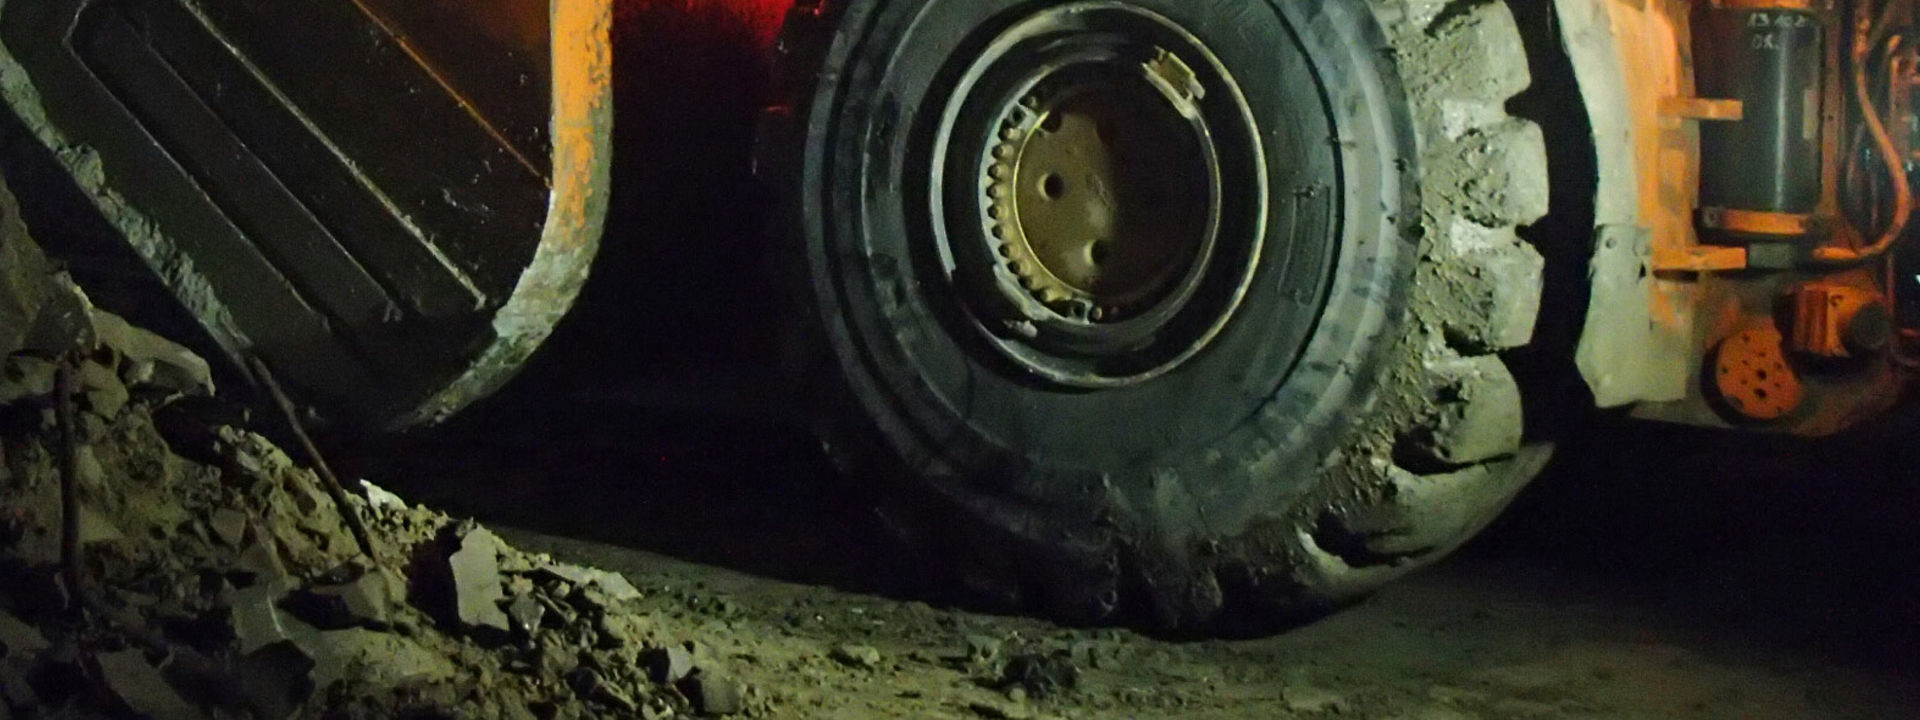 A large loader truck working in an underground mine